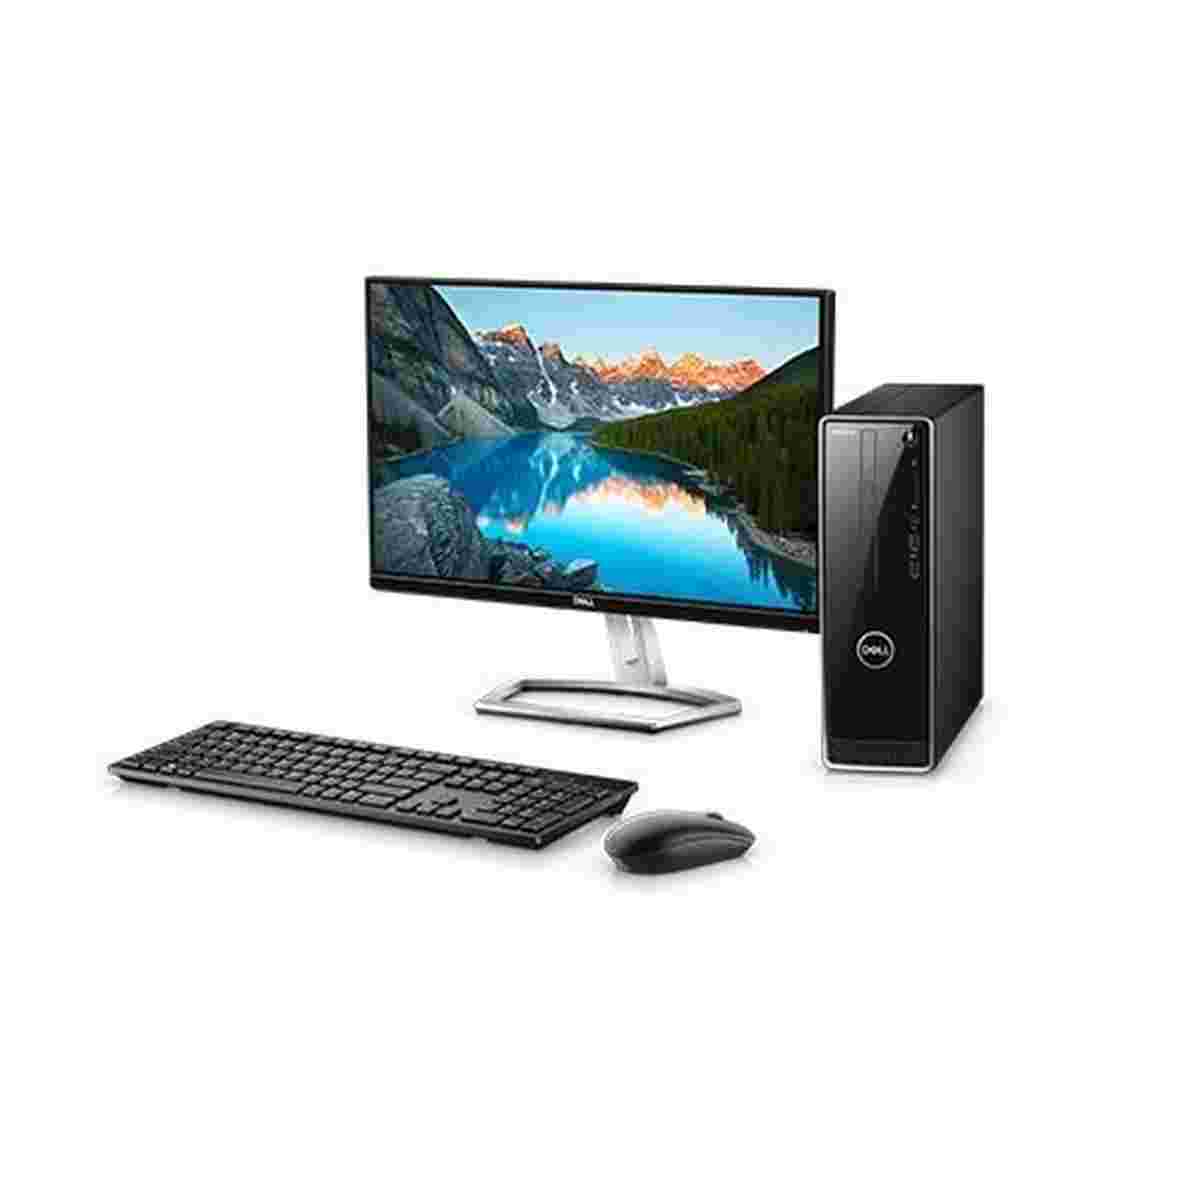 Dell 3470 Win10 | Dell Inspiron 3470 Desktop Price 23 Jan 2022 Dell 3470 Tower Desktop online shop - HelpingIndia